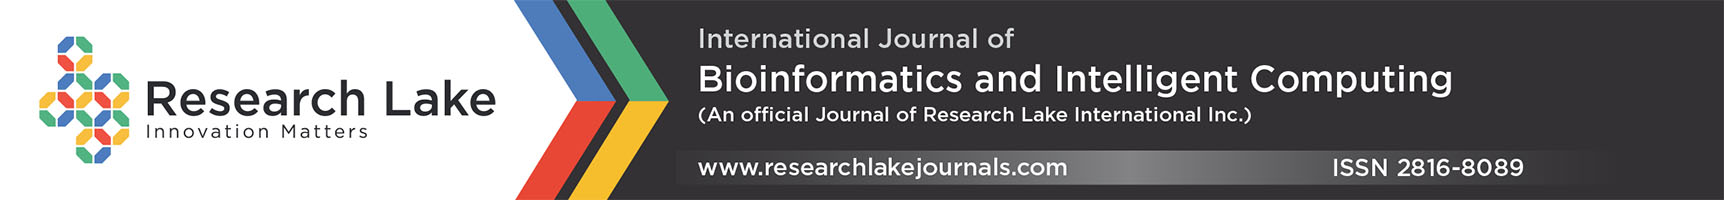 International Journal of Bioinformatics and Intelligent Computing